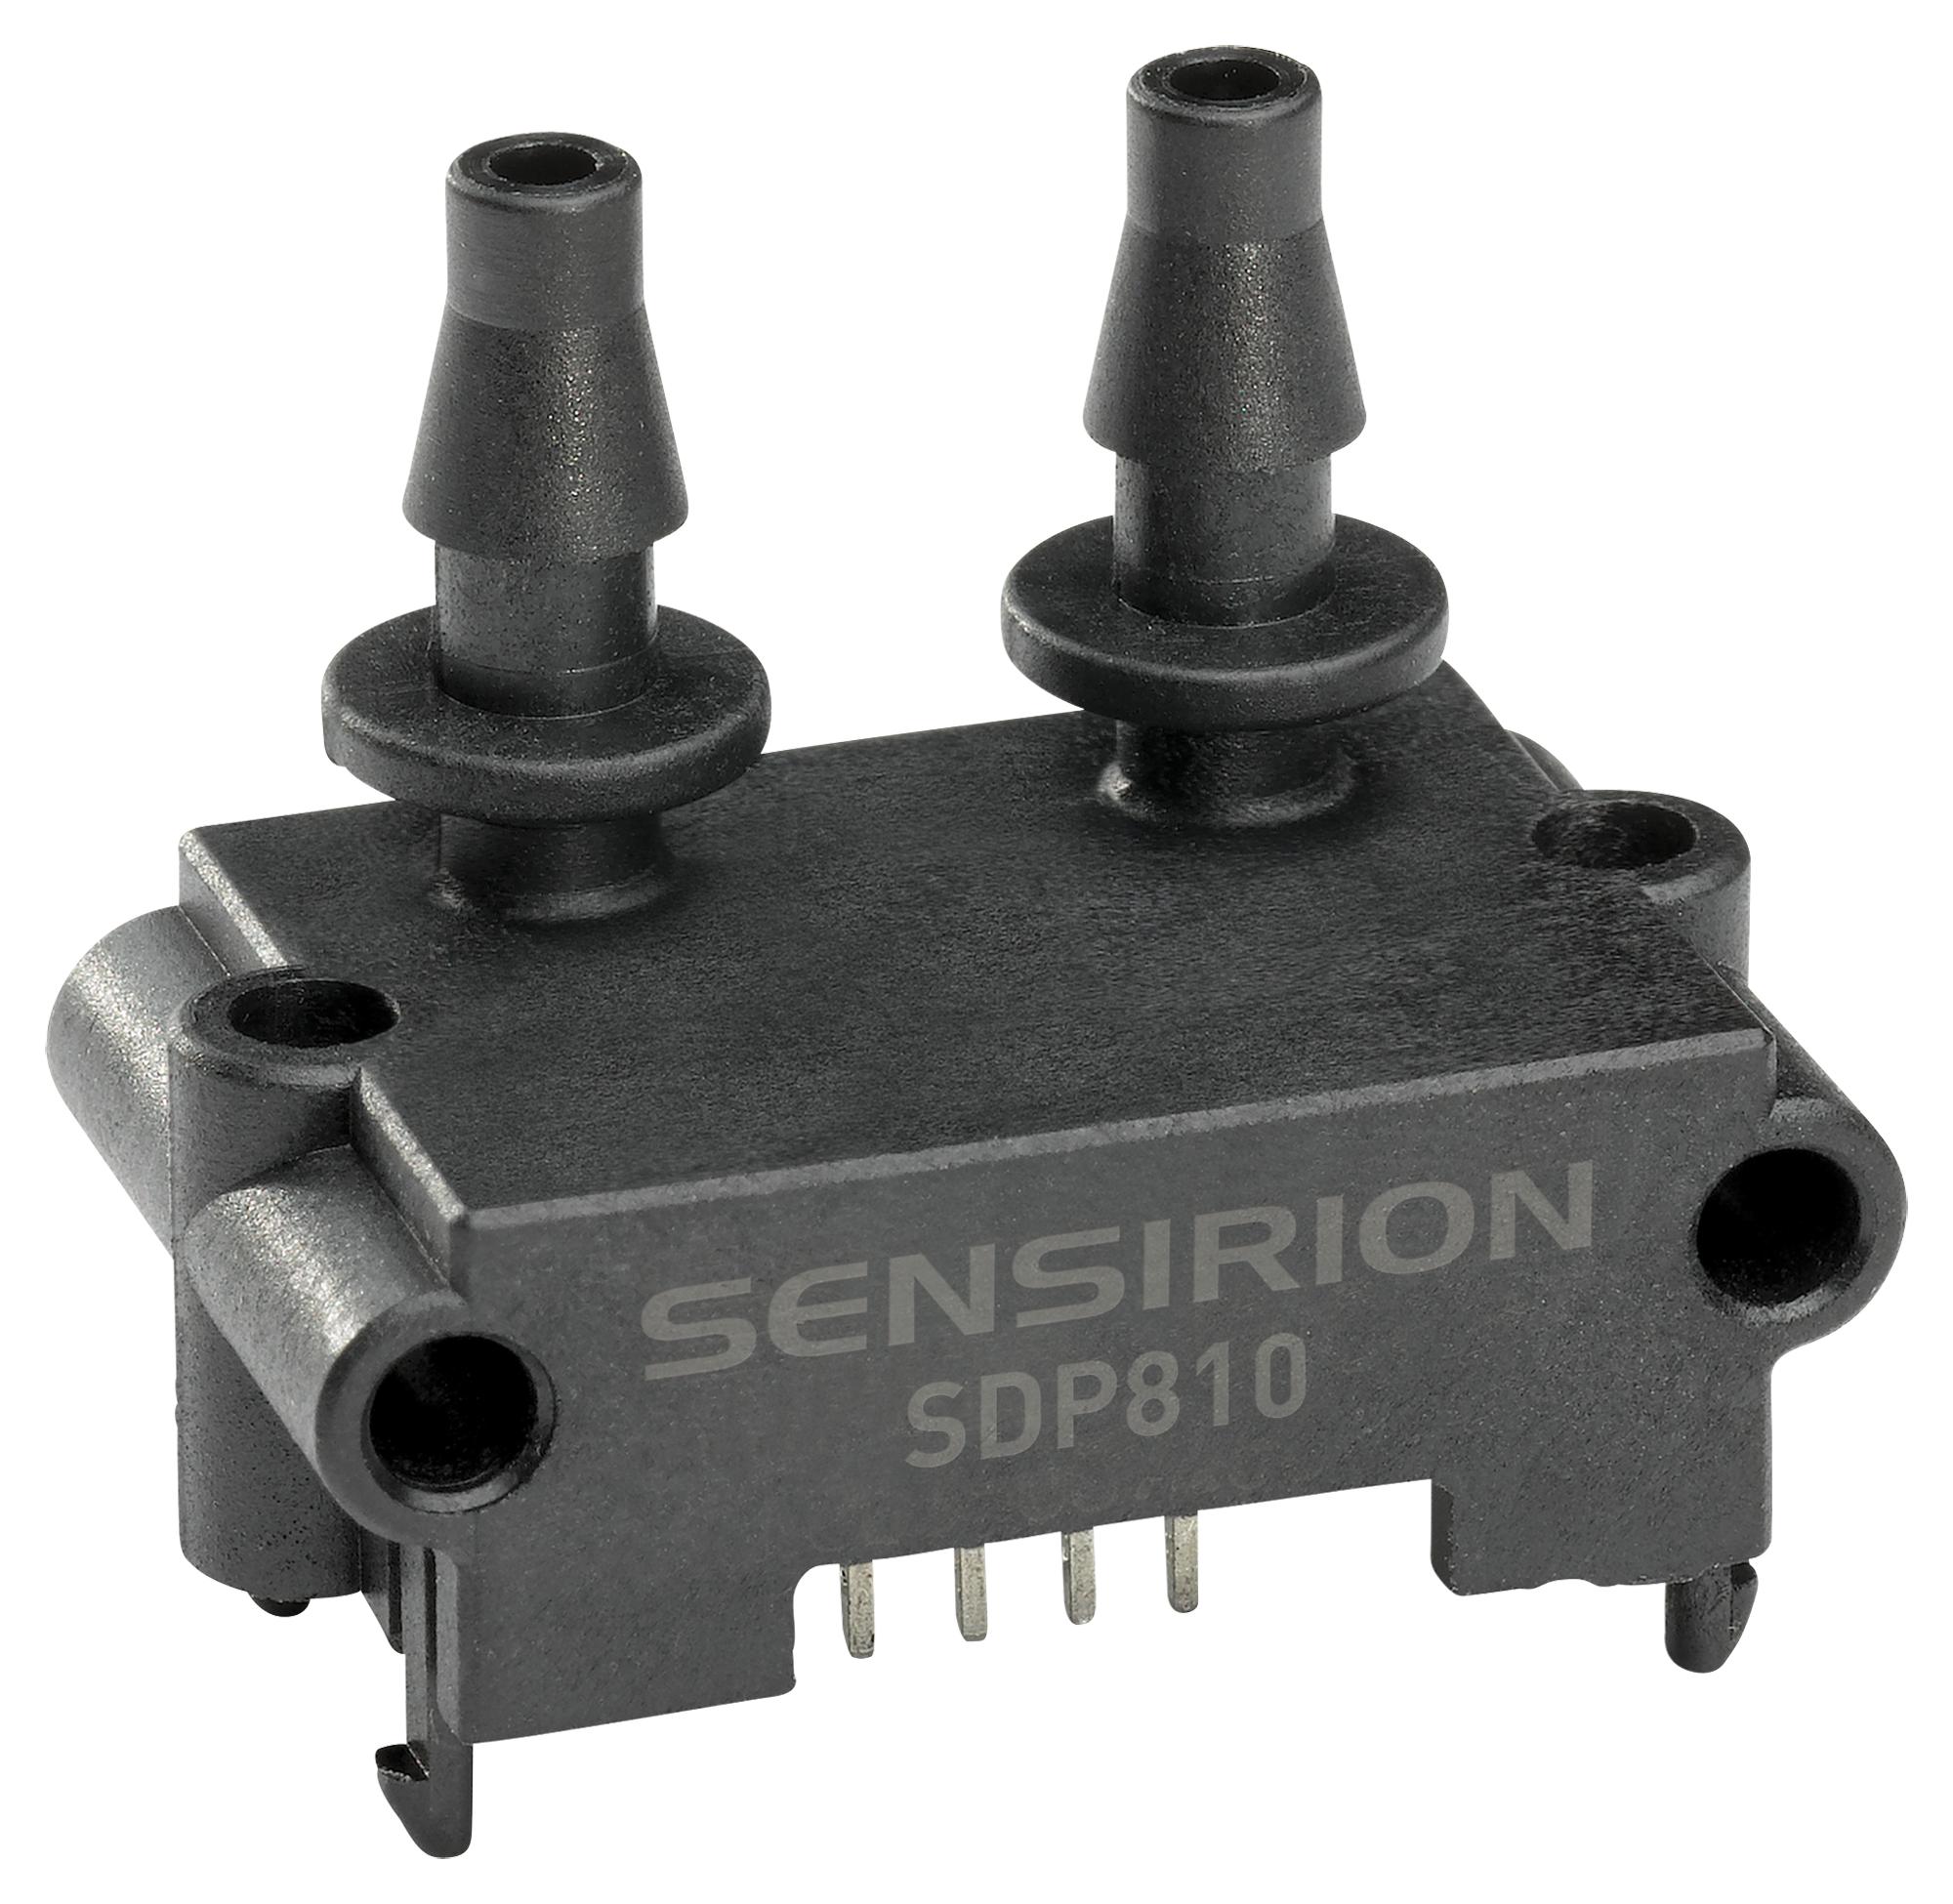 Sensirion Sdp811-500Pa Press Sensor, Differential, 500Pa, I2C